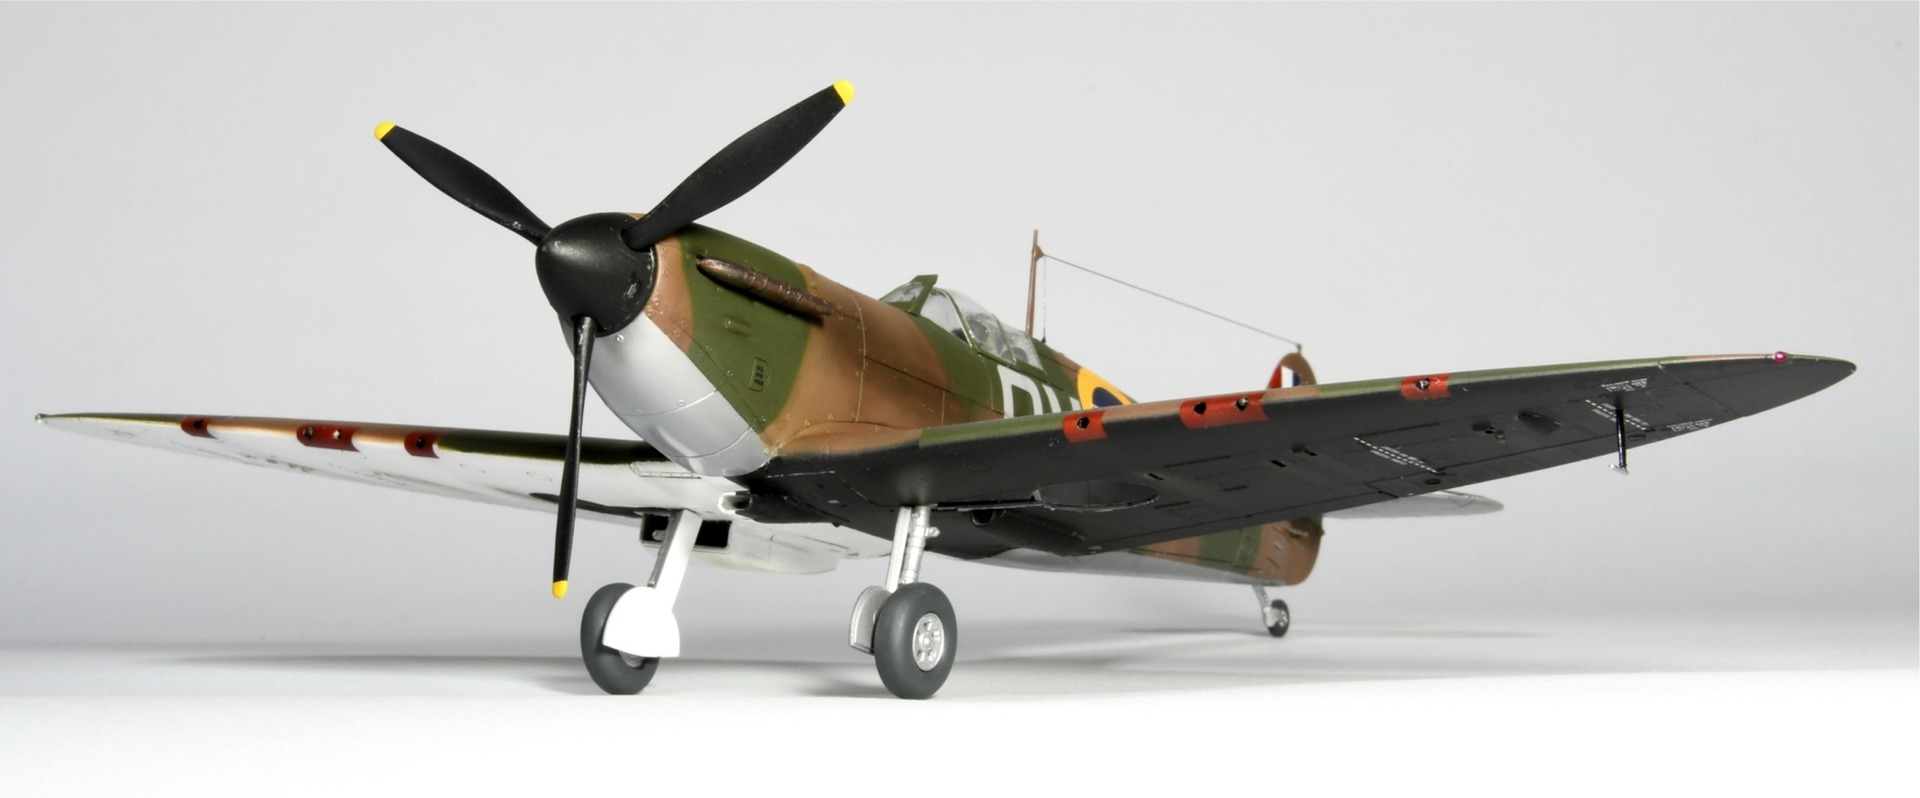 RAFイギリス空軍 スーパーマリン・スピットファイア戦闘機のプラモデル: プラモデルによる航空模型博物館